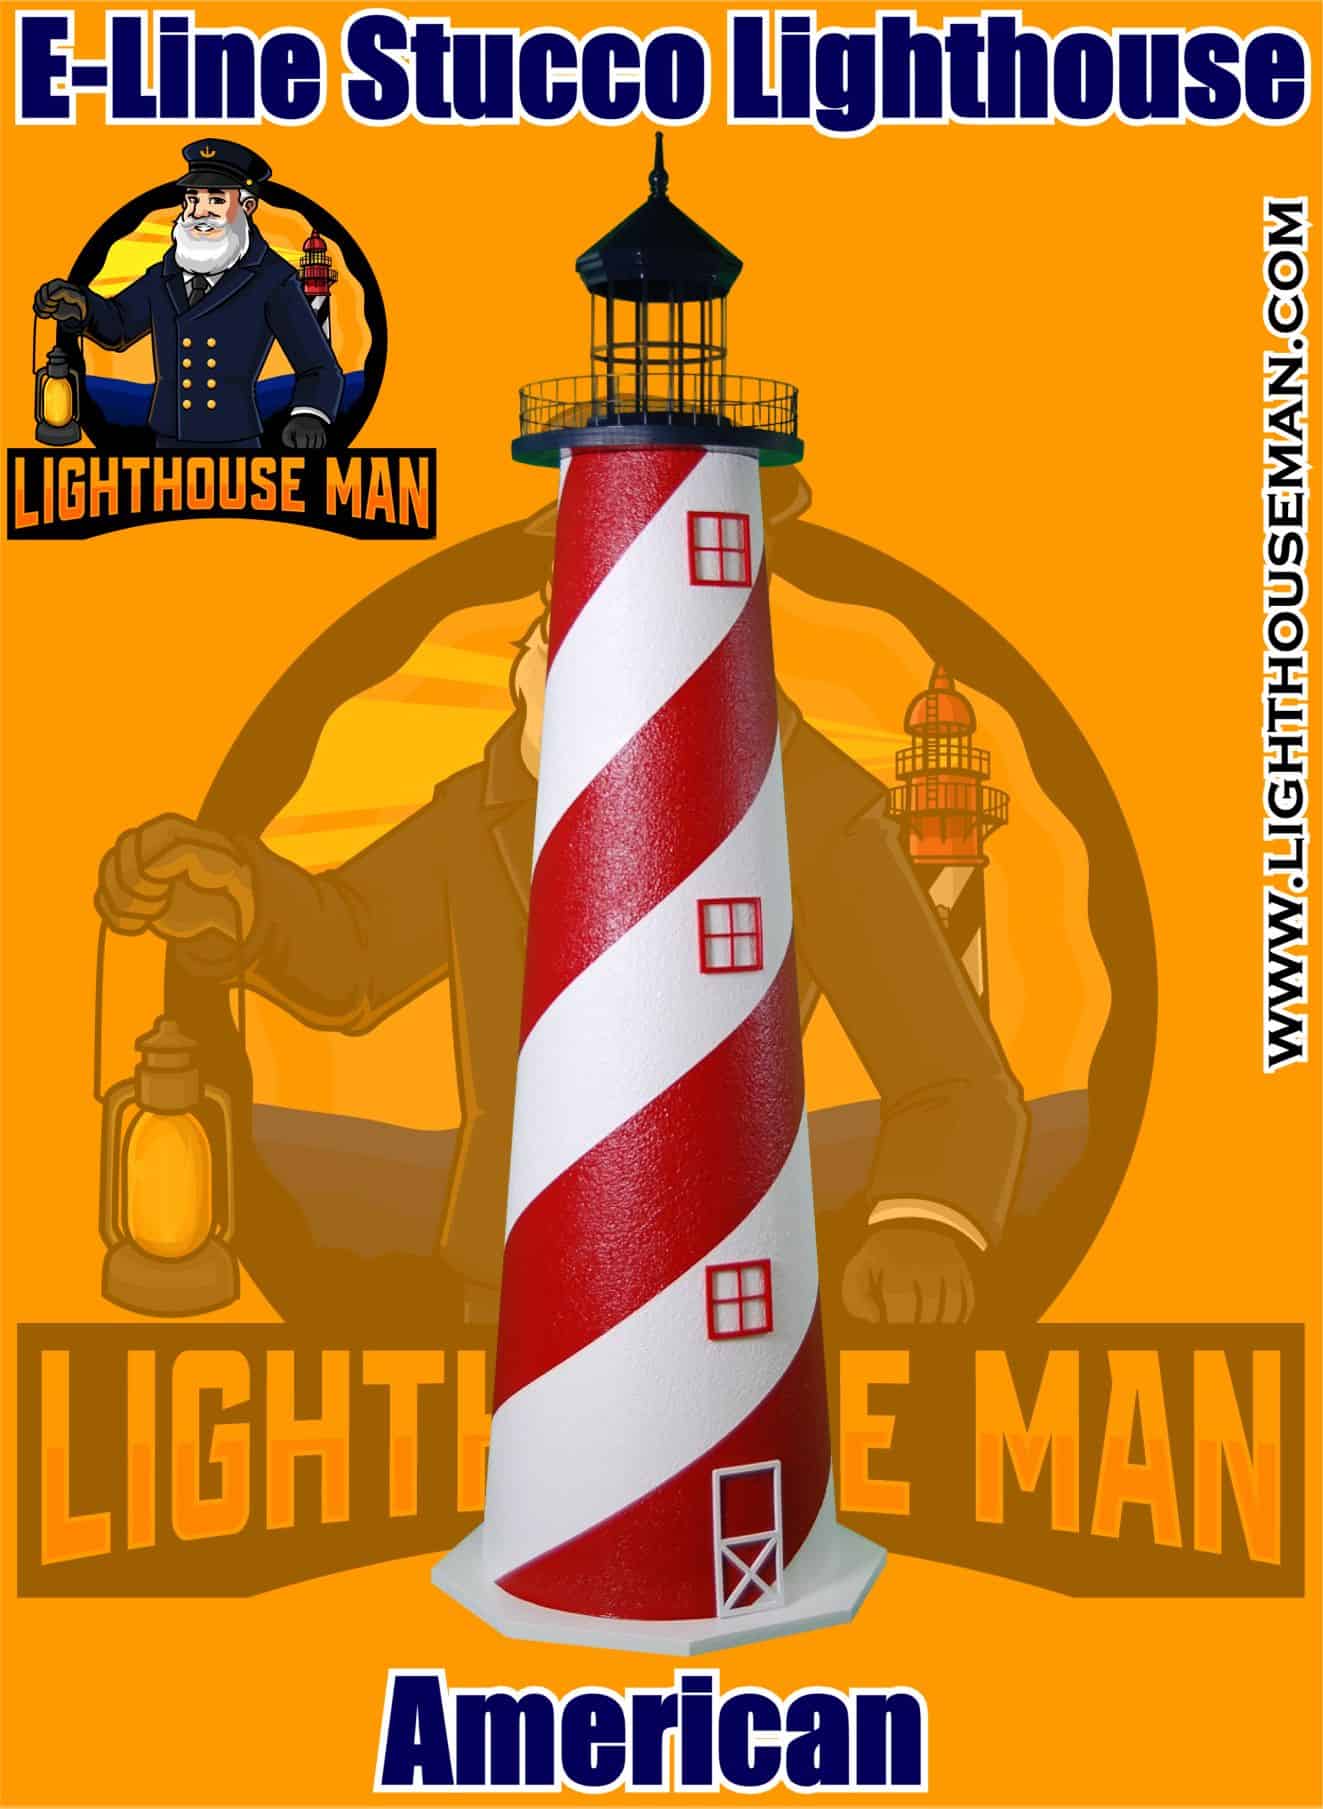 American E-line Stucco Lawn Lighthouse